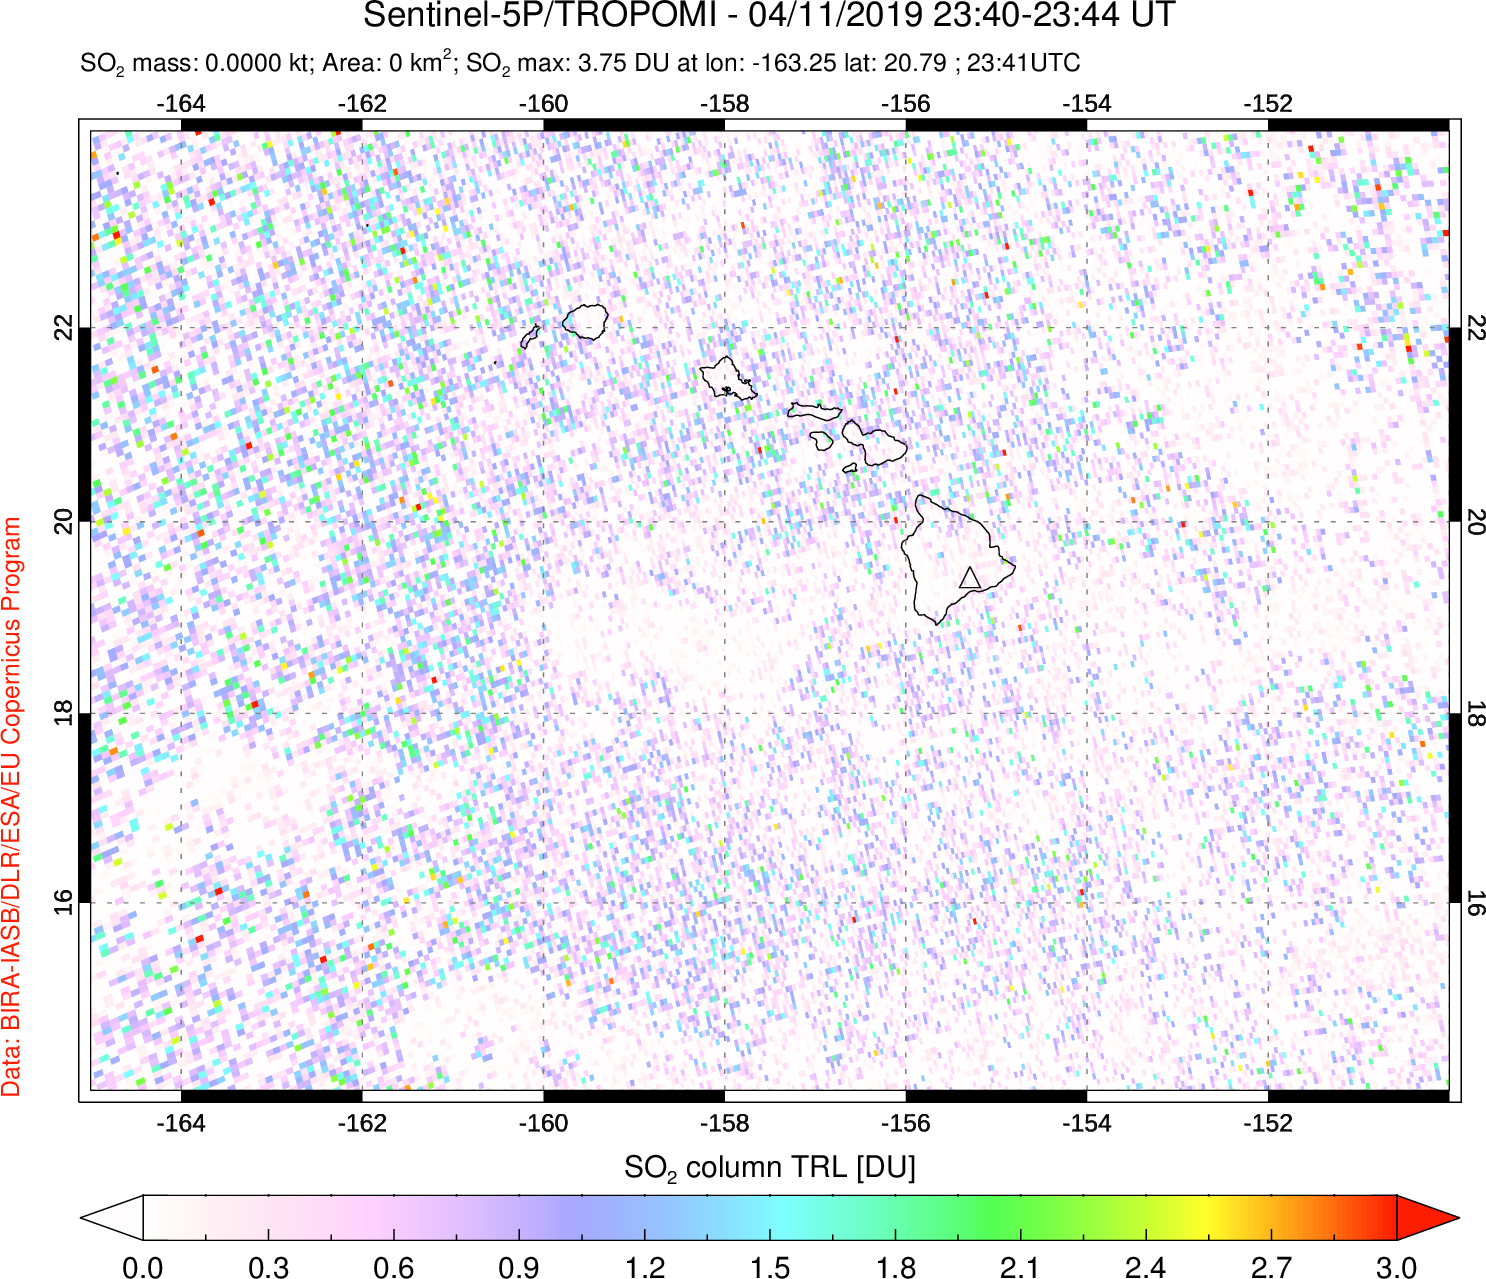 A sulfur dioxide image over Hawaii, USA on Apr 11, 2019.